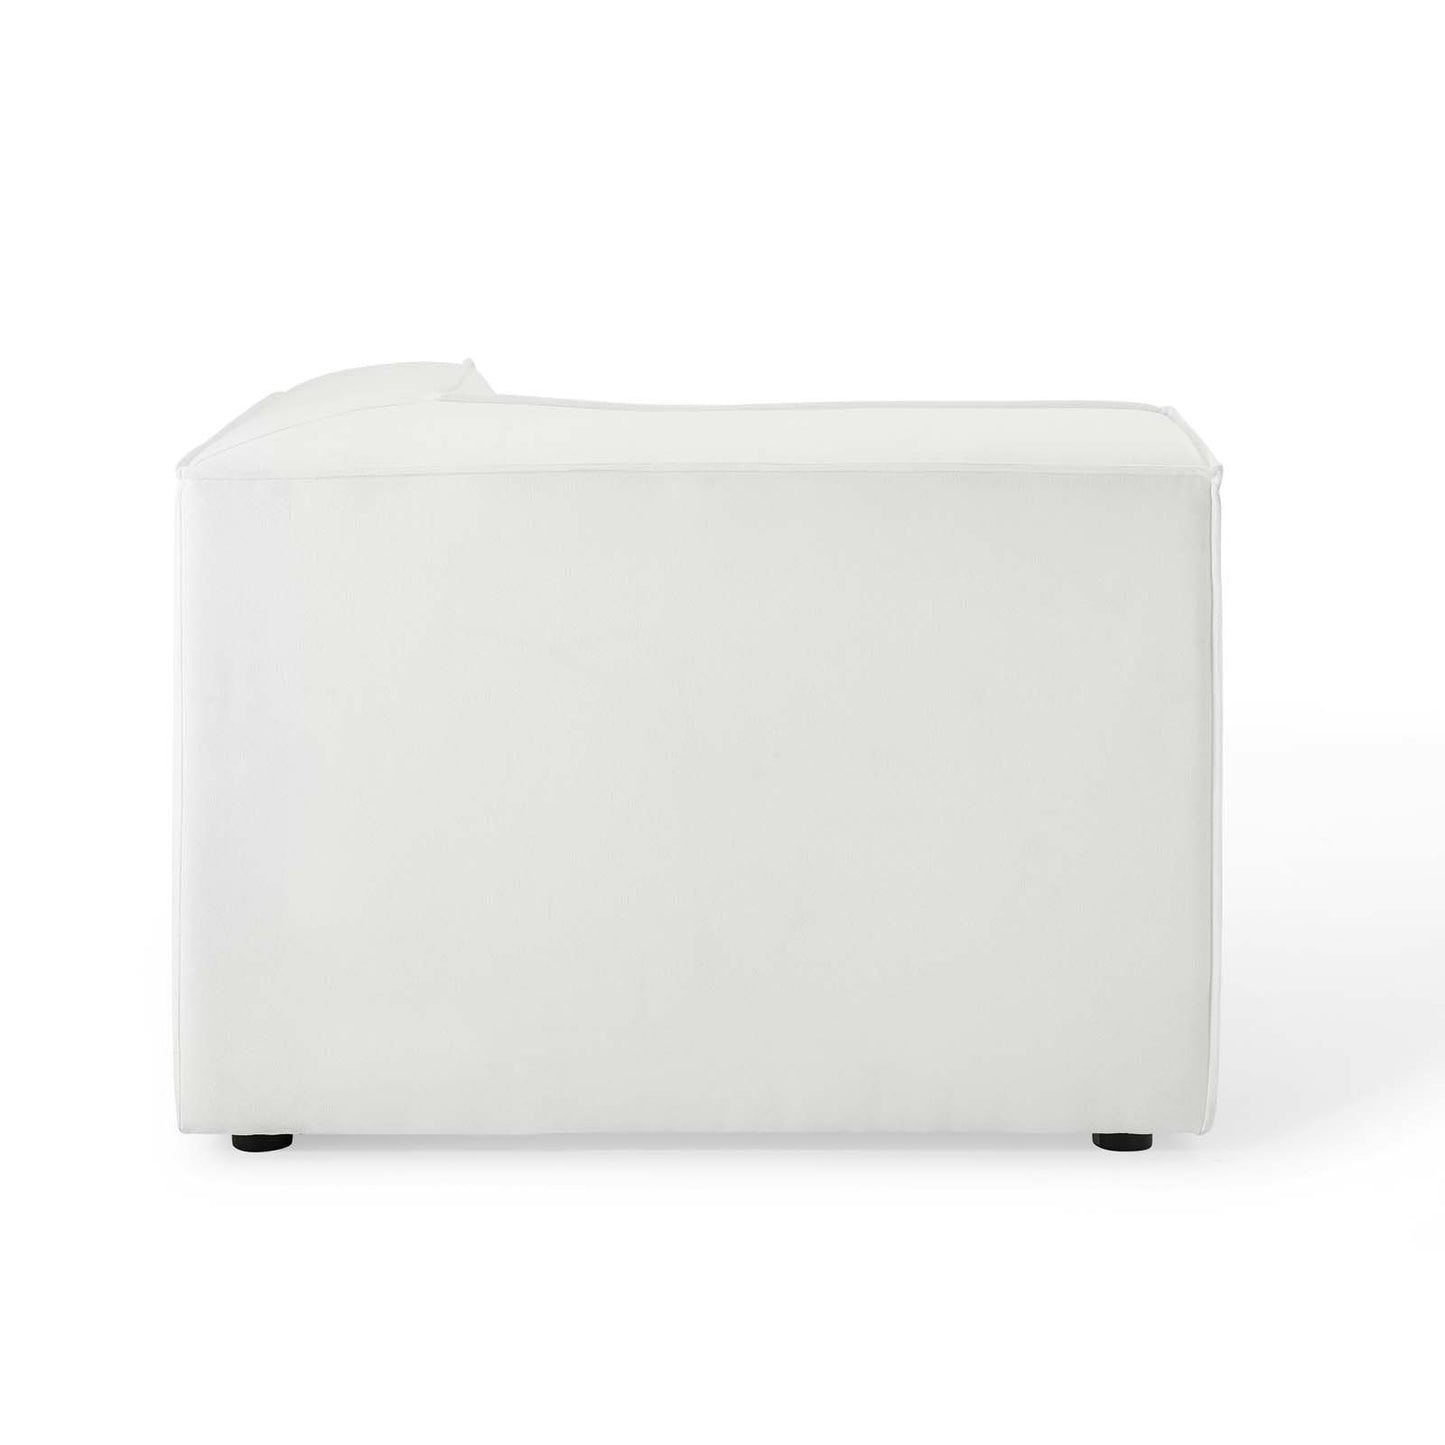 Restore Sectional Sofa Corner Chair White EEI-3871-WHI